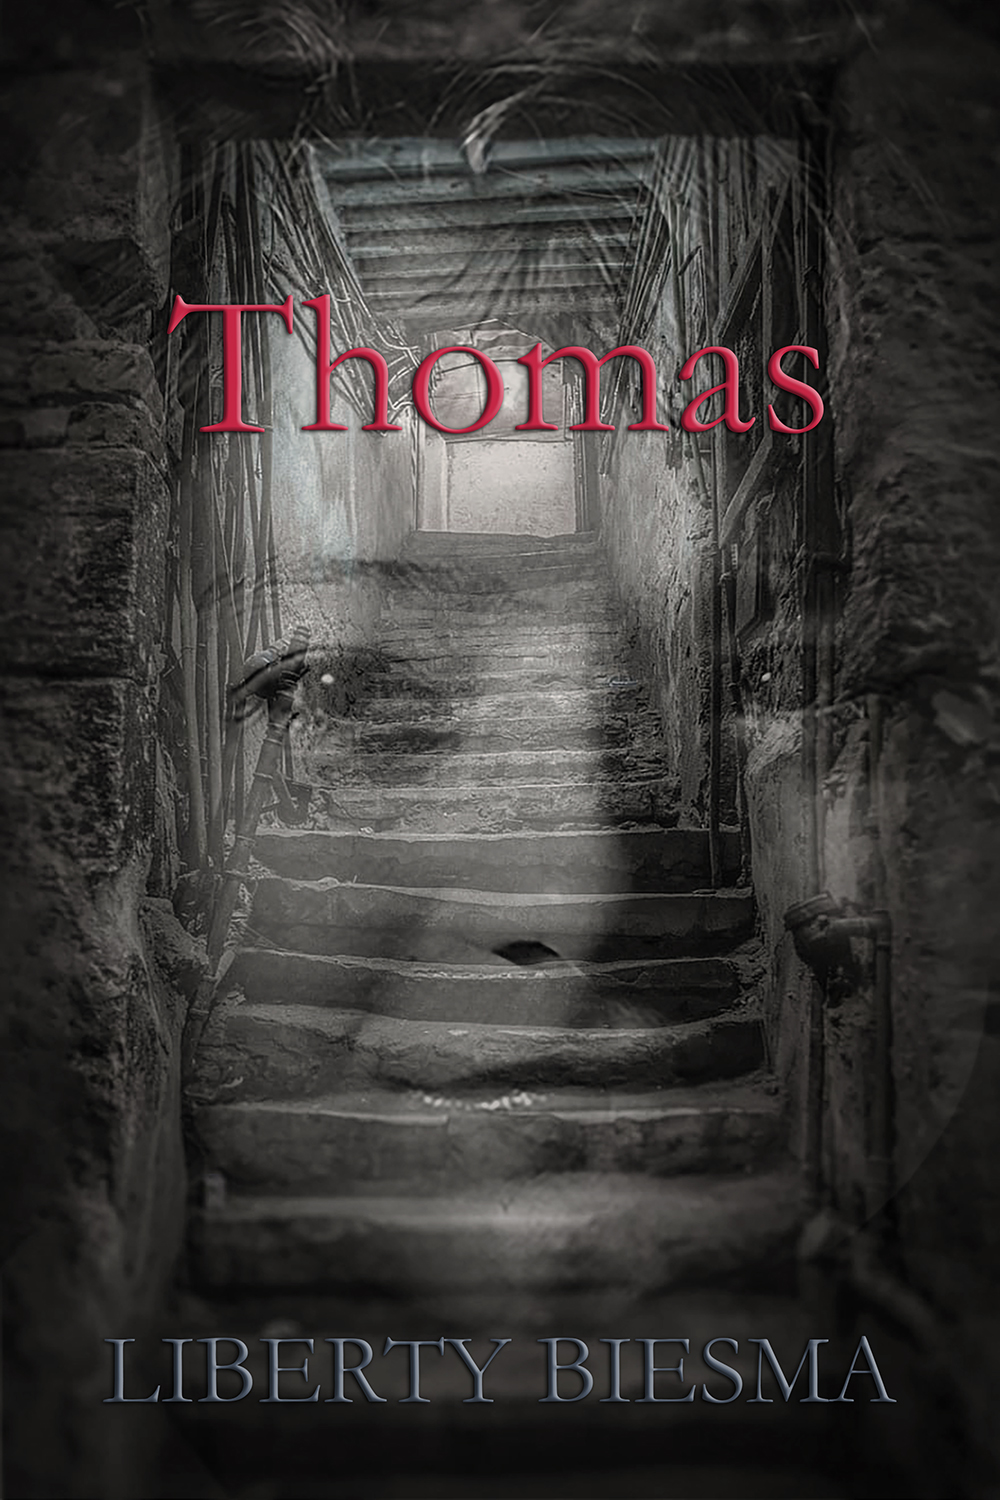 Thomas - A short story by Liberty Biesma